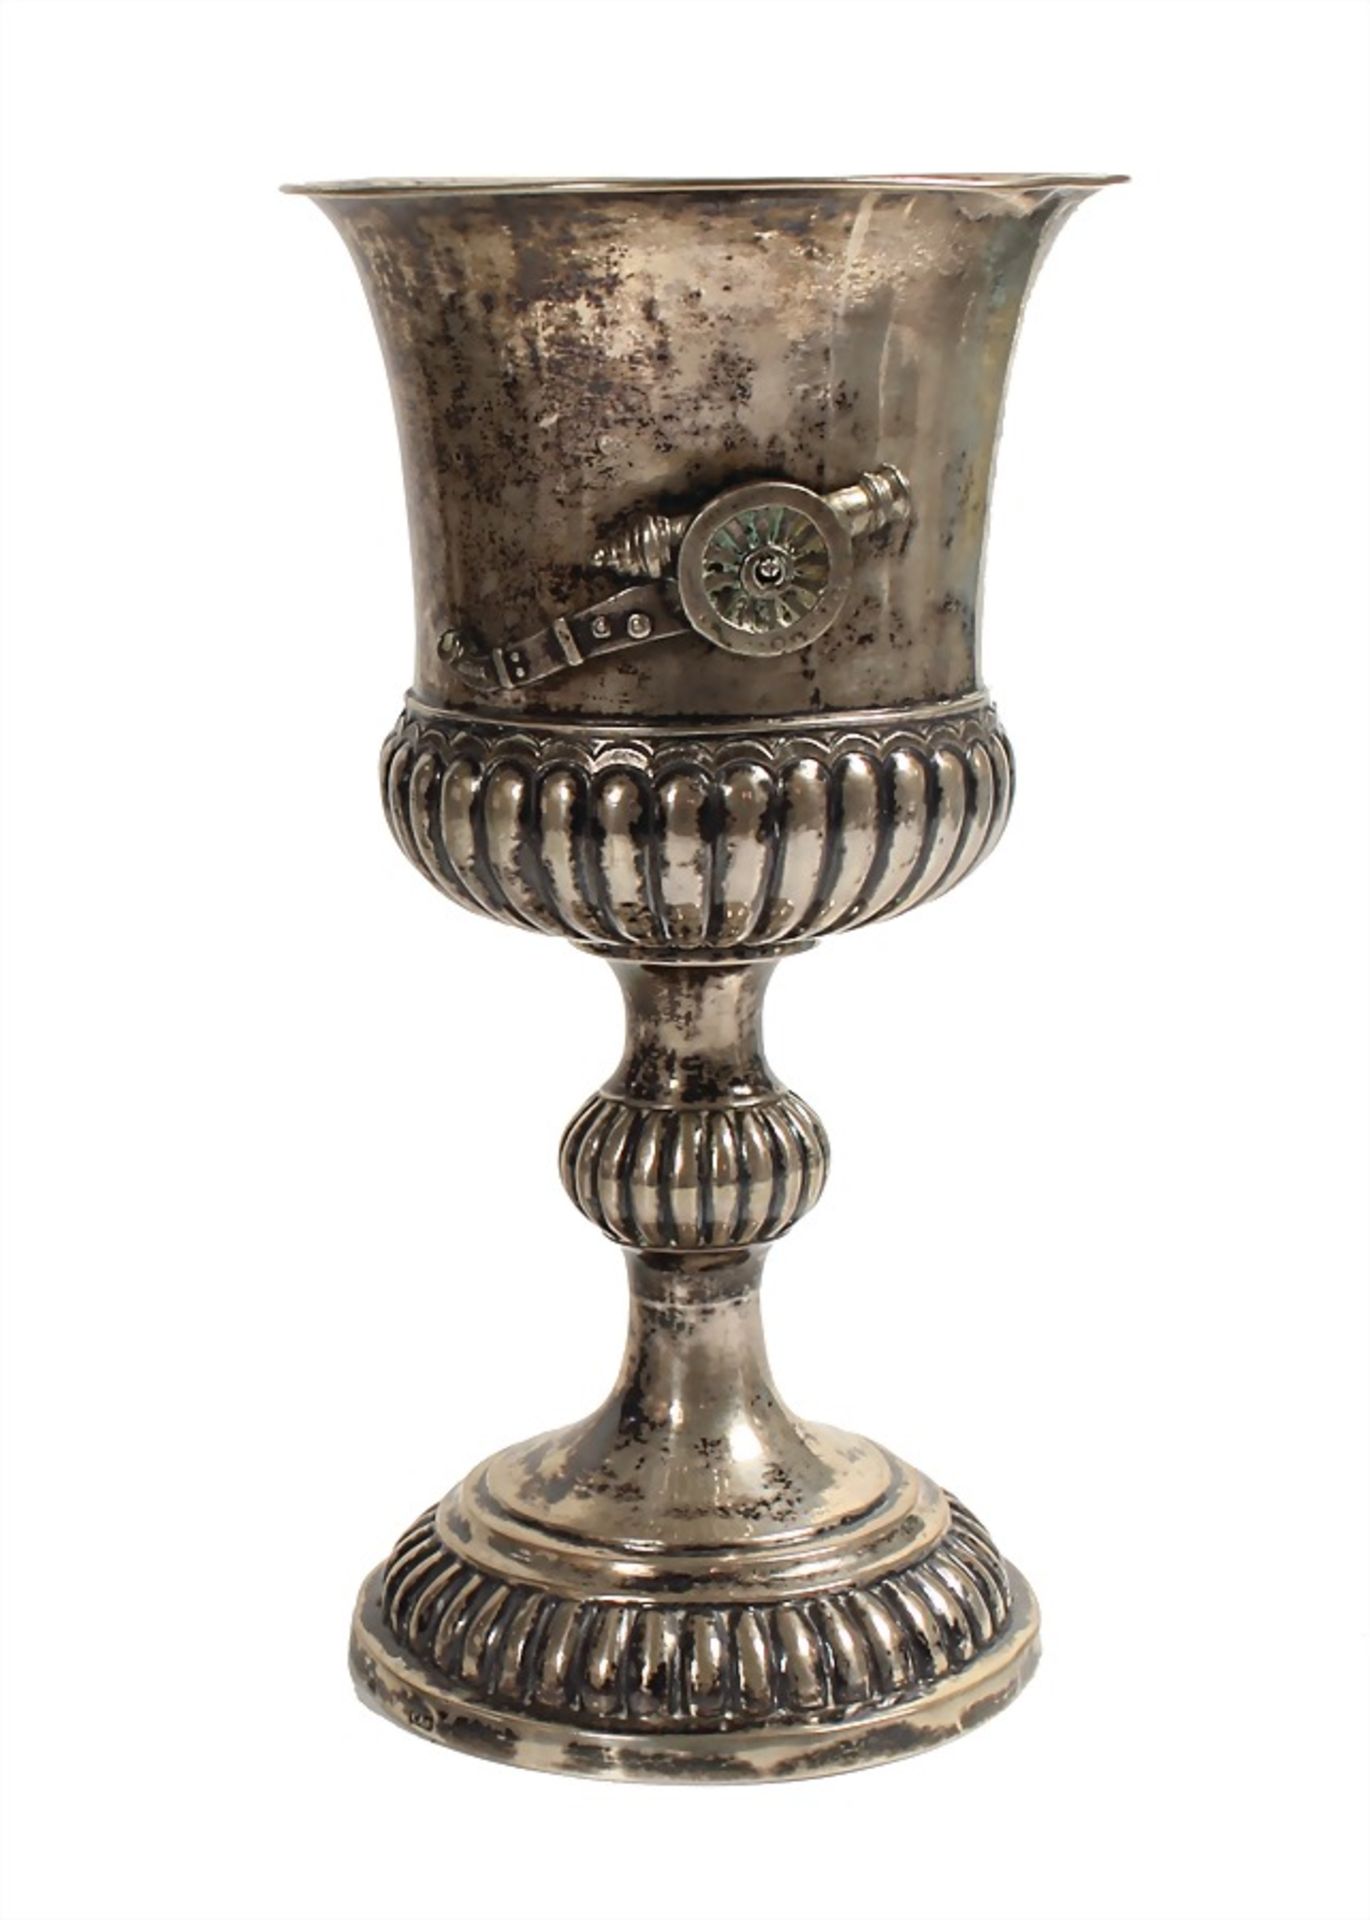 cup, Hamburg 1831, silver, makers mark CAR, awarded as honoring as "KANONIER", engraving: den 16 ten